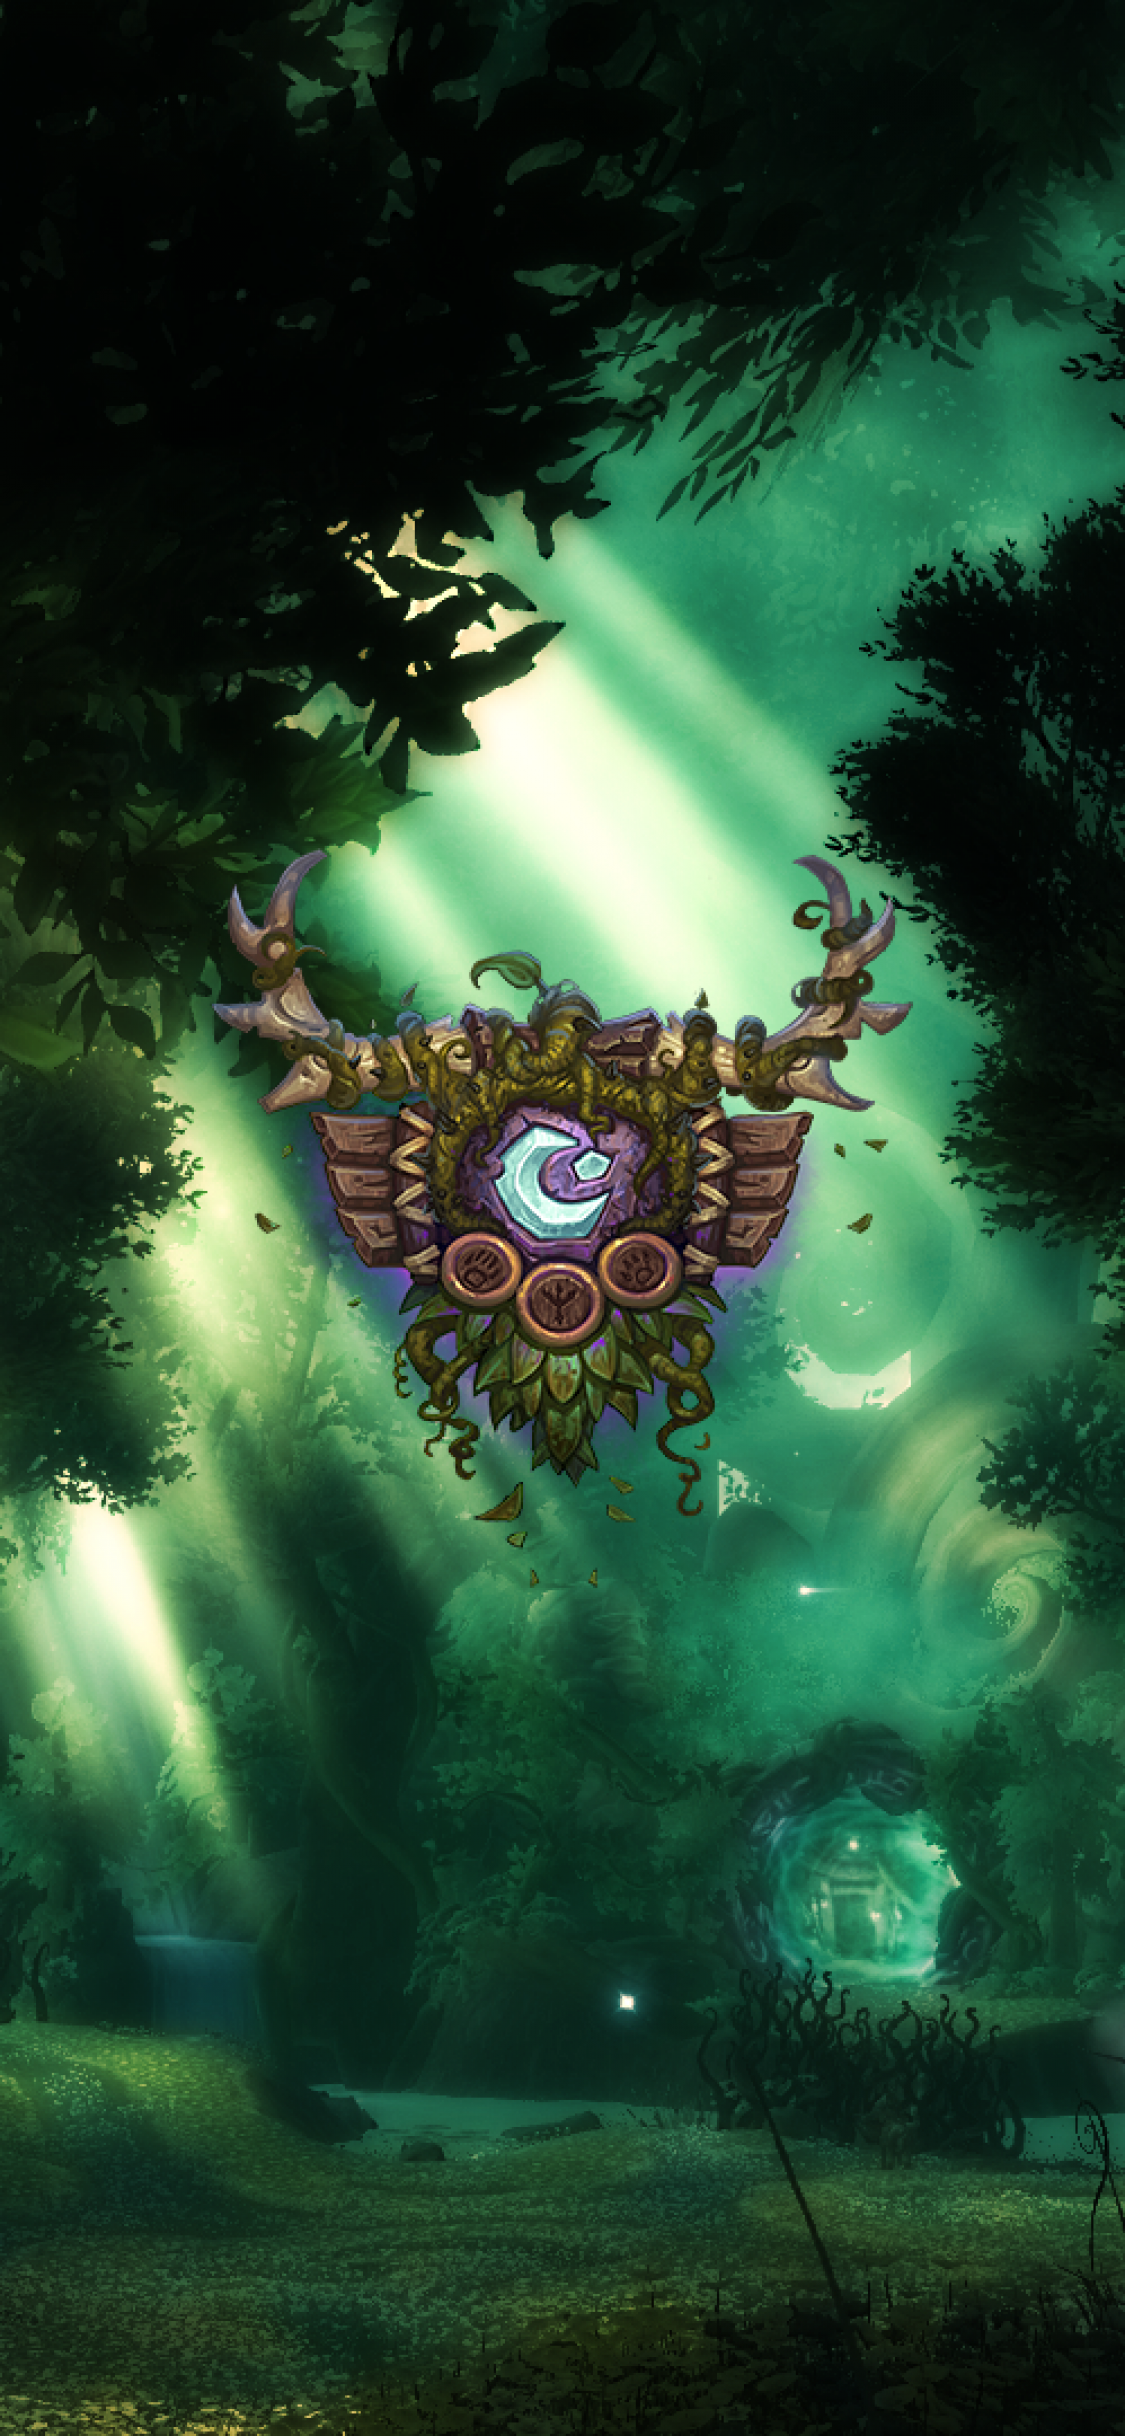 World Of Warcraft iPhone X Wallpaperwalpaperlist.com